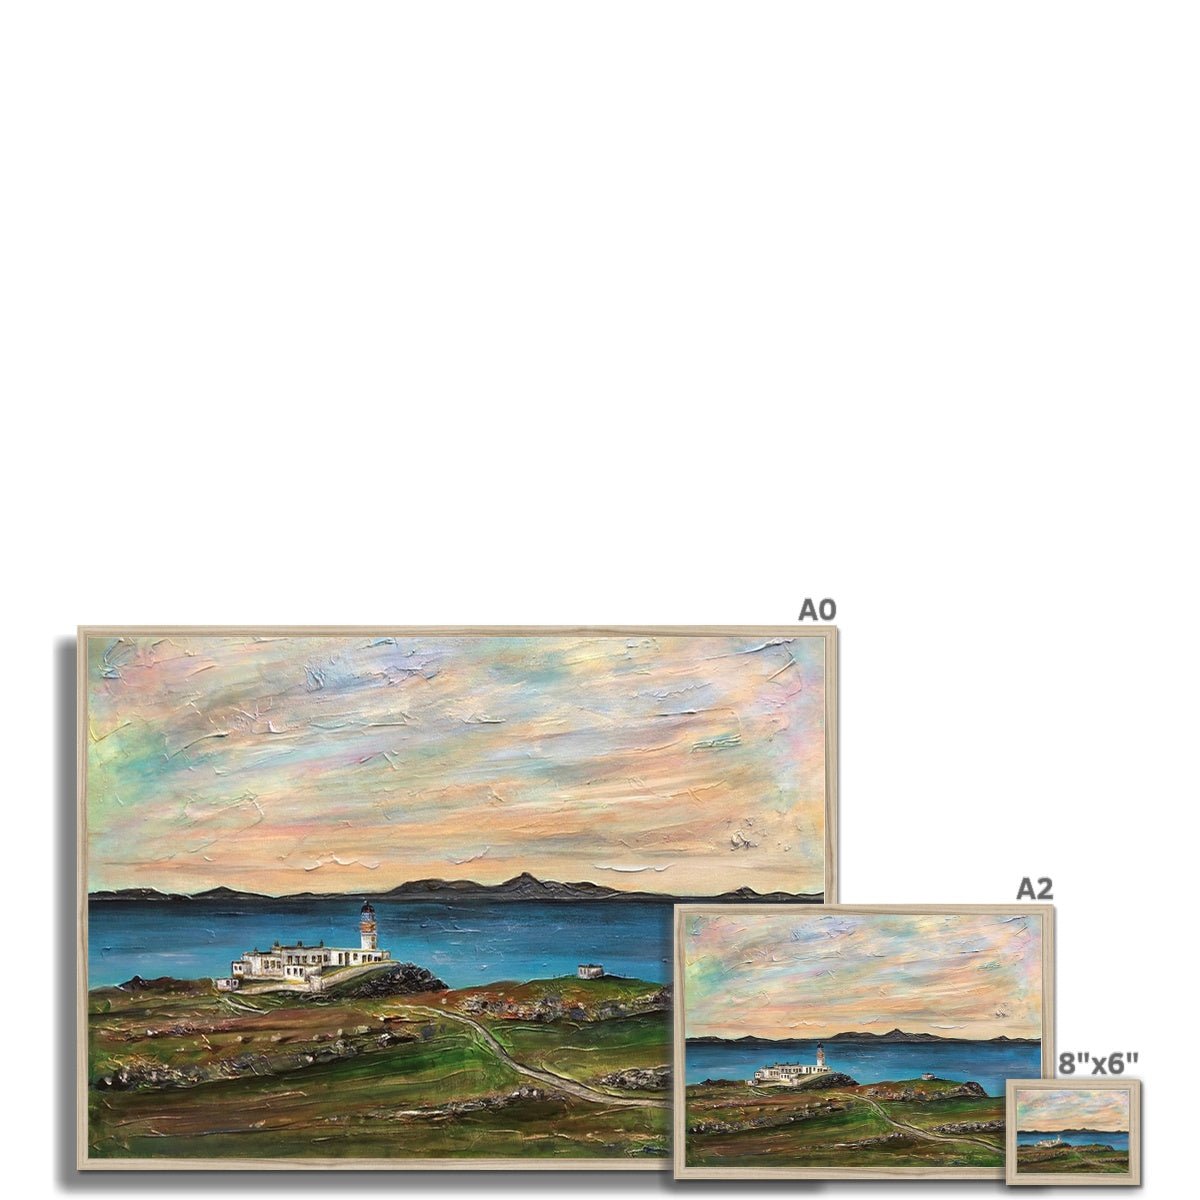 Neist Point Skye Painting | Framed Prints From Scotland-Framed Prints-Skye Art Gallery-Paintings, Prints, Homeware, Art Gifts From Scotland By Scottish Artist Kevin Hunter